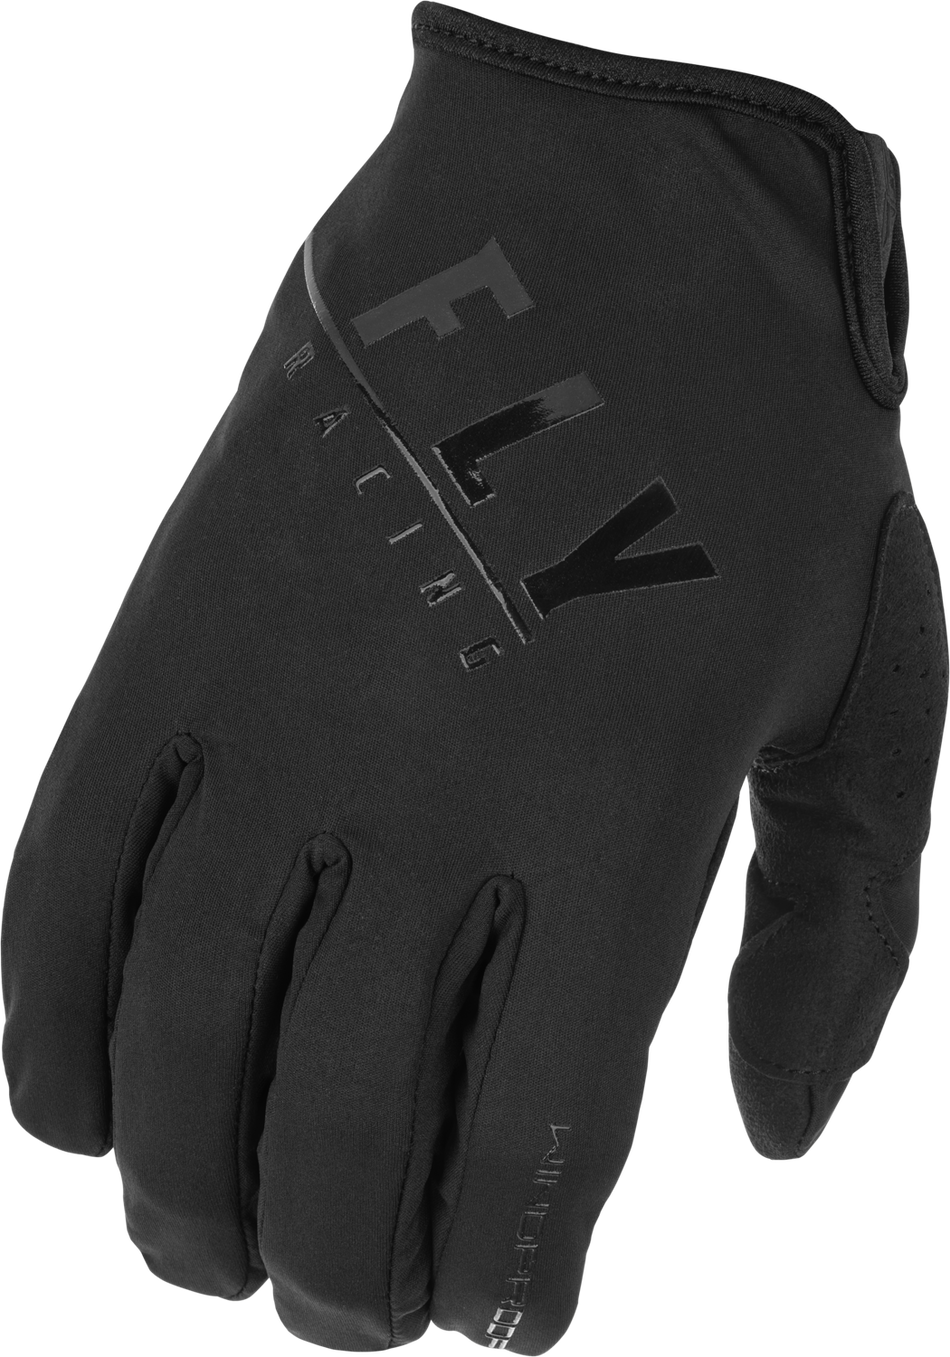 FLY RACING Windproof Gloves Black Sz 12 371-14112